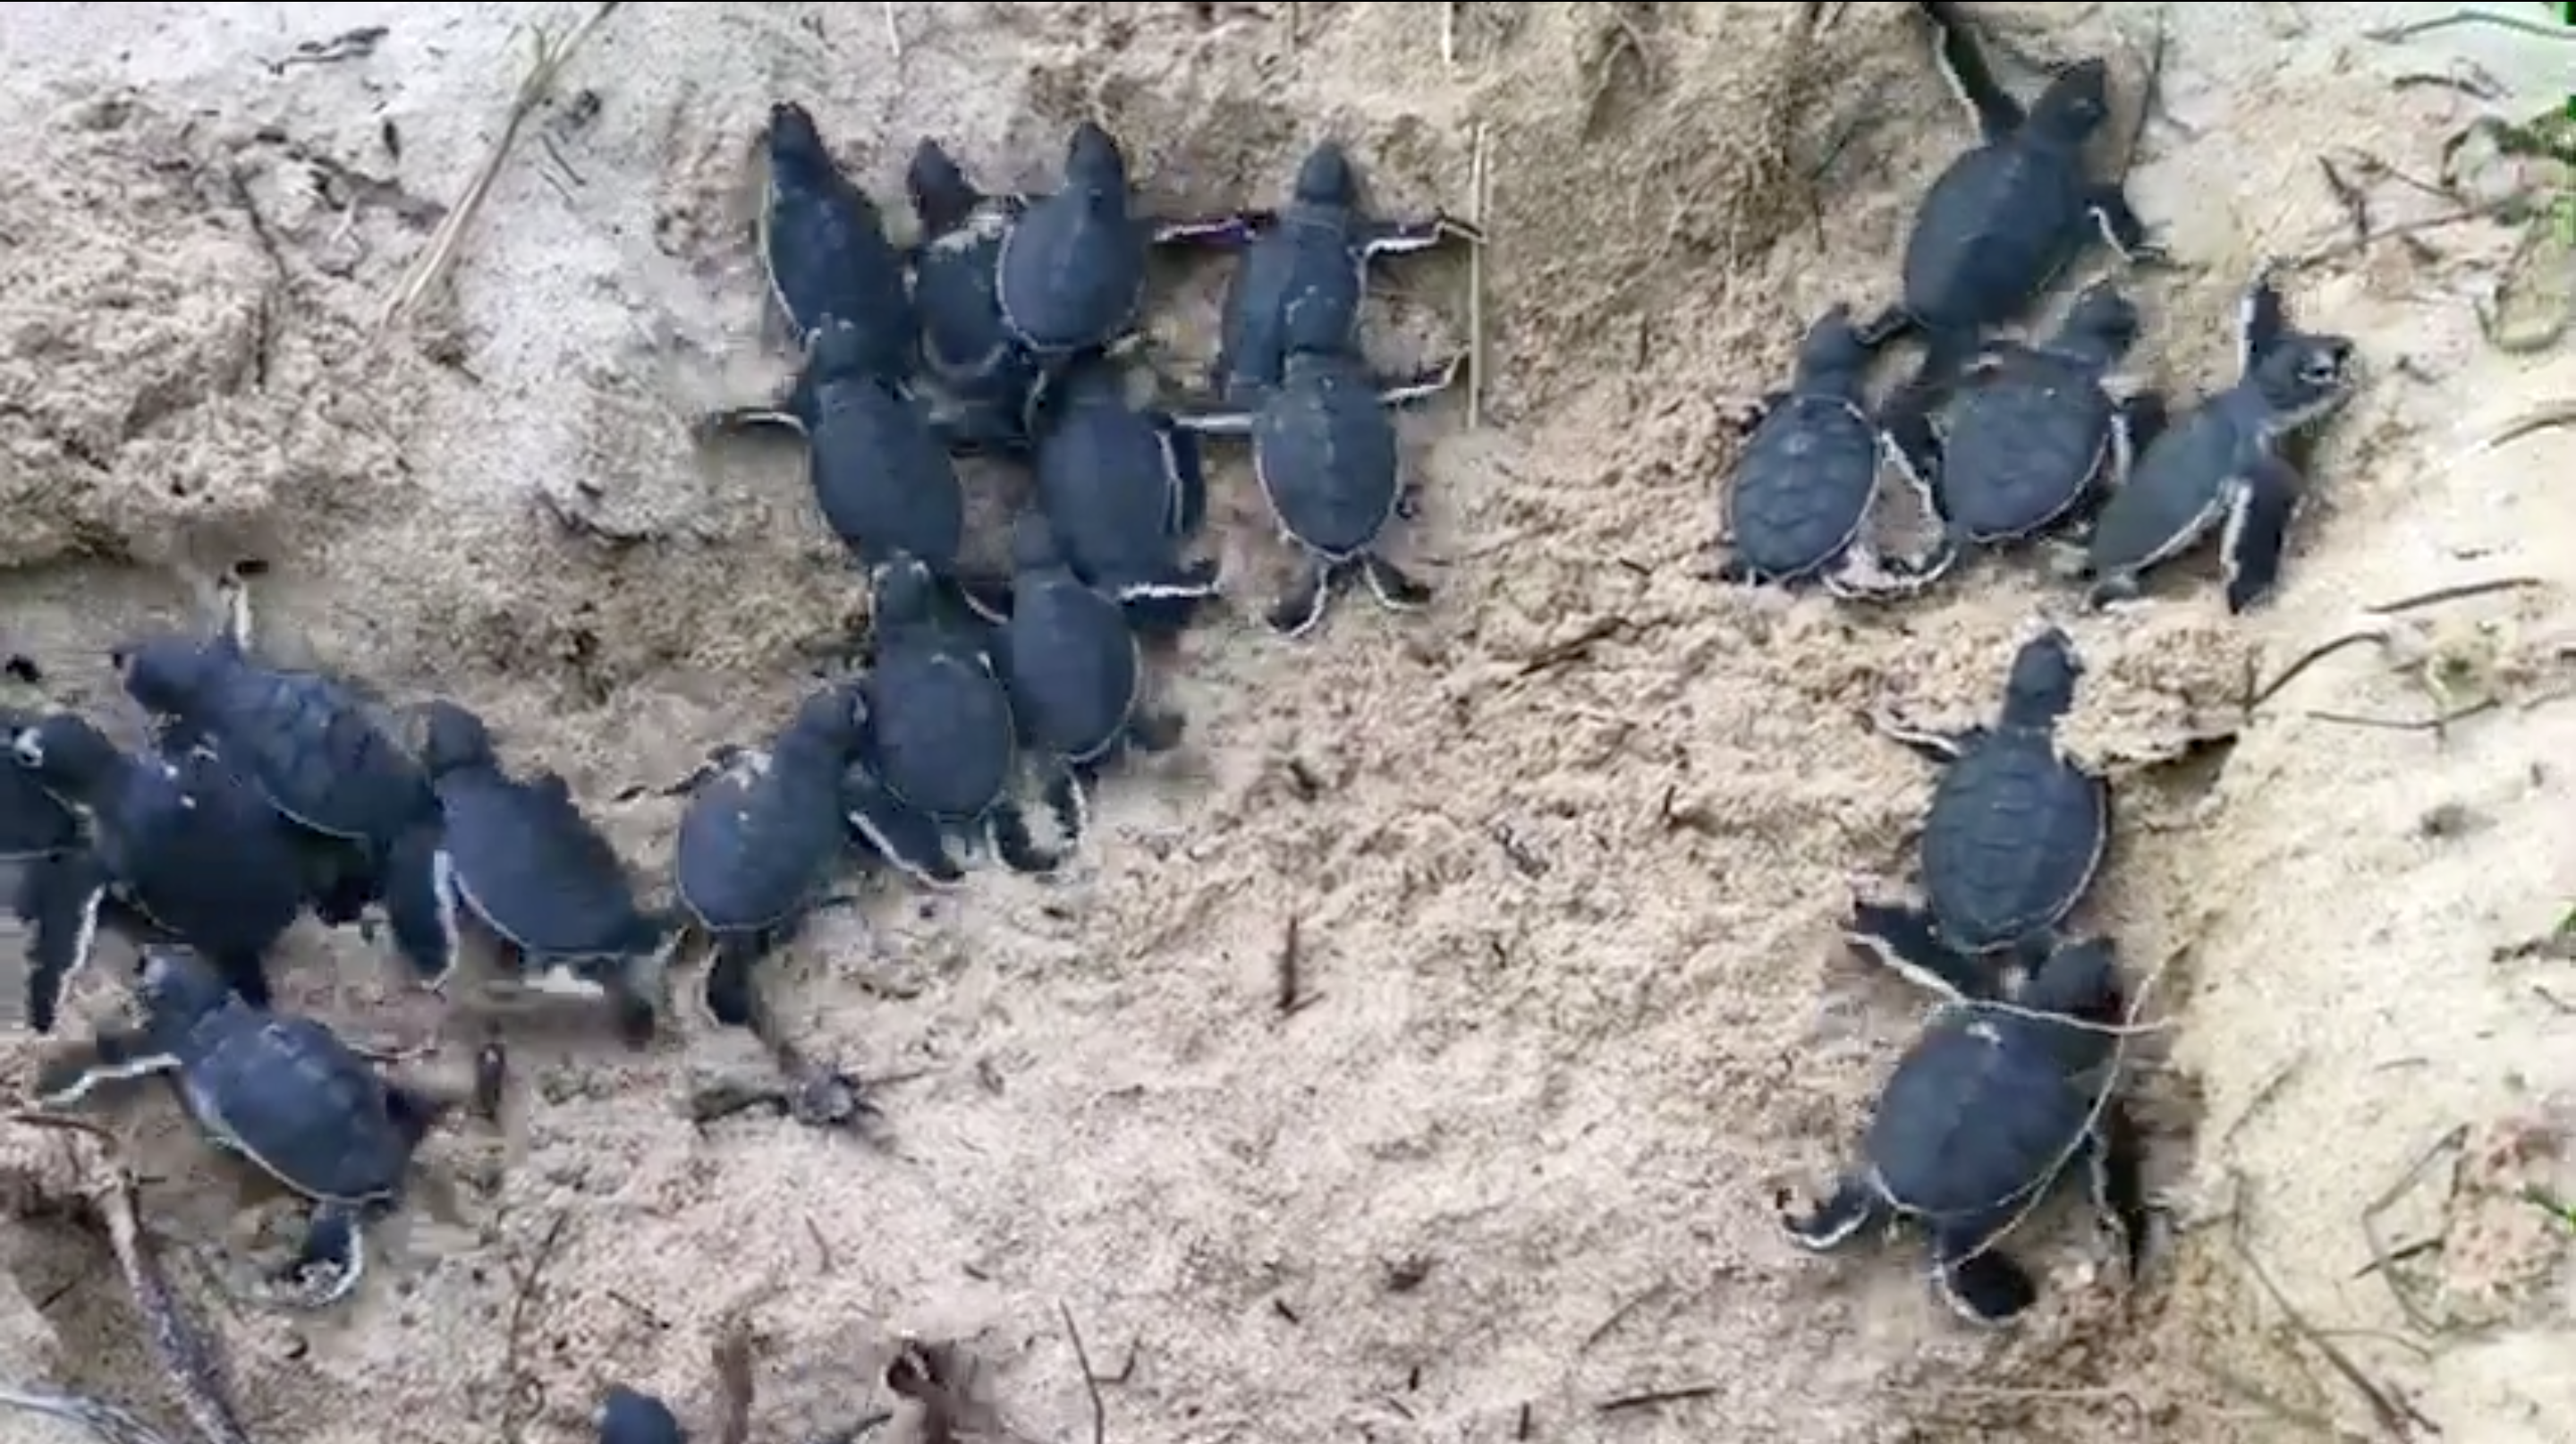 45 sea turtles hatch safely on Vietnamese island